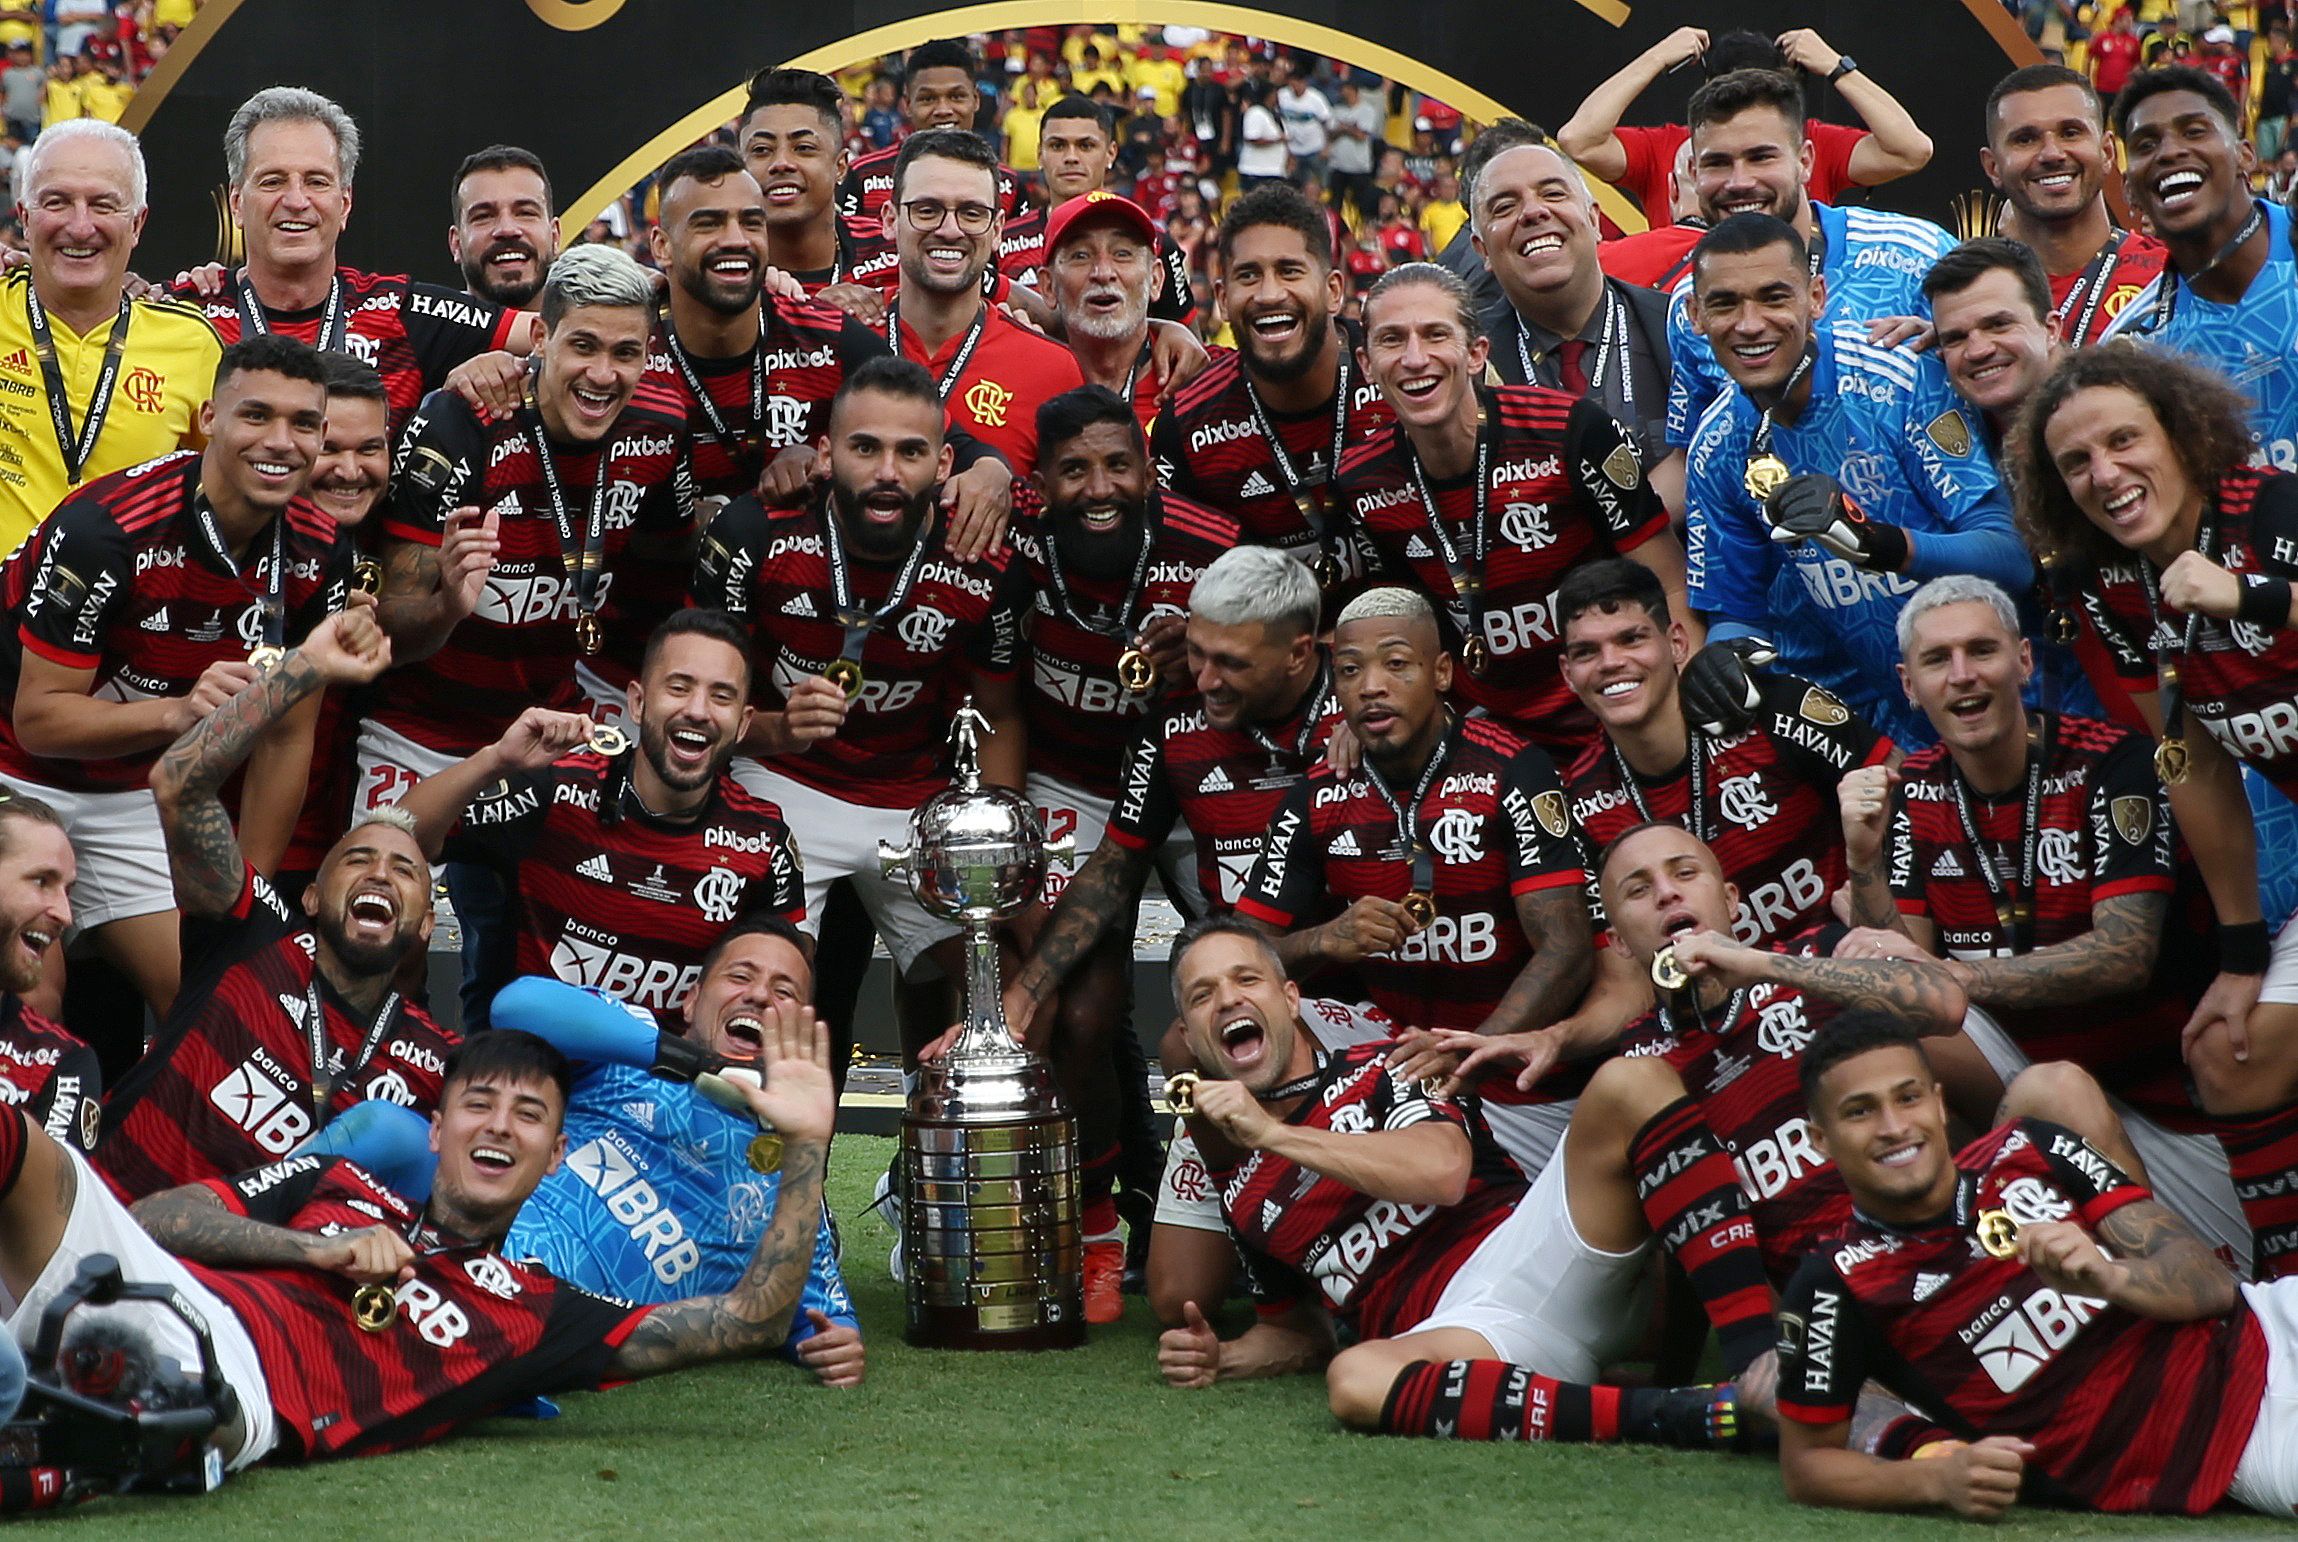 David Luiz won the Copa Libertadores with Flamengo